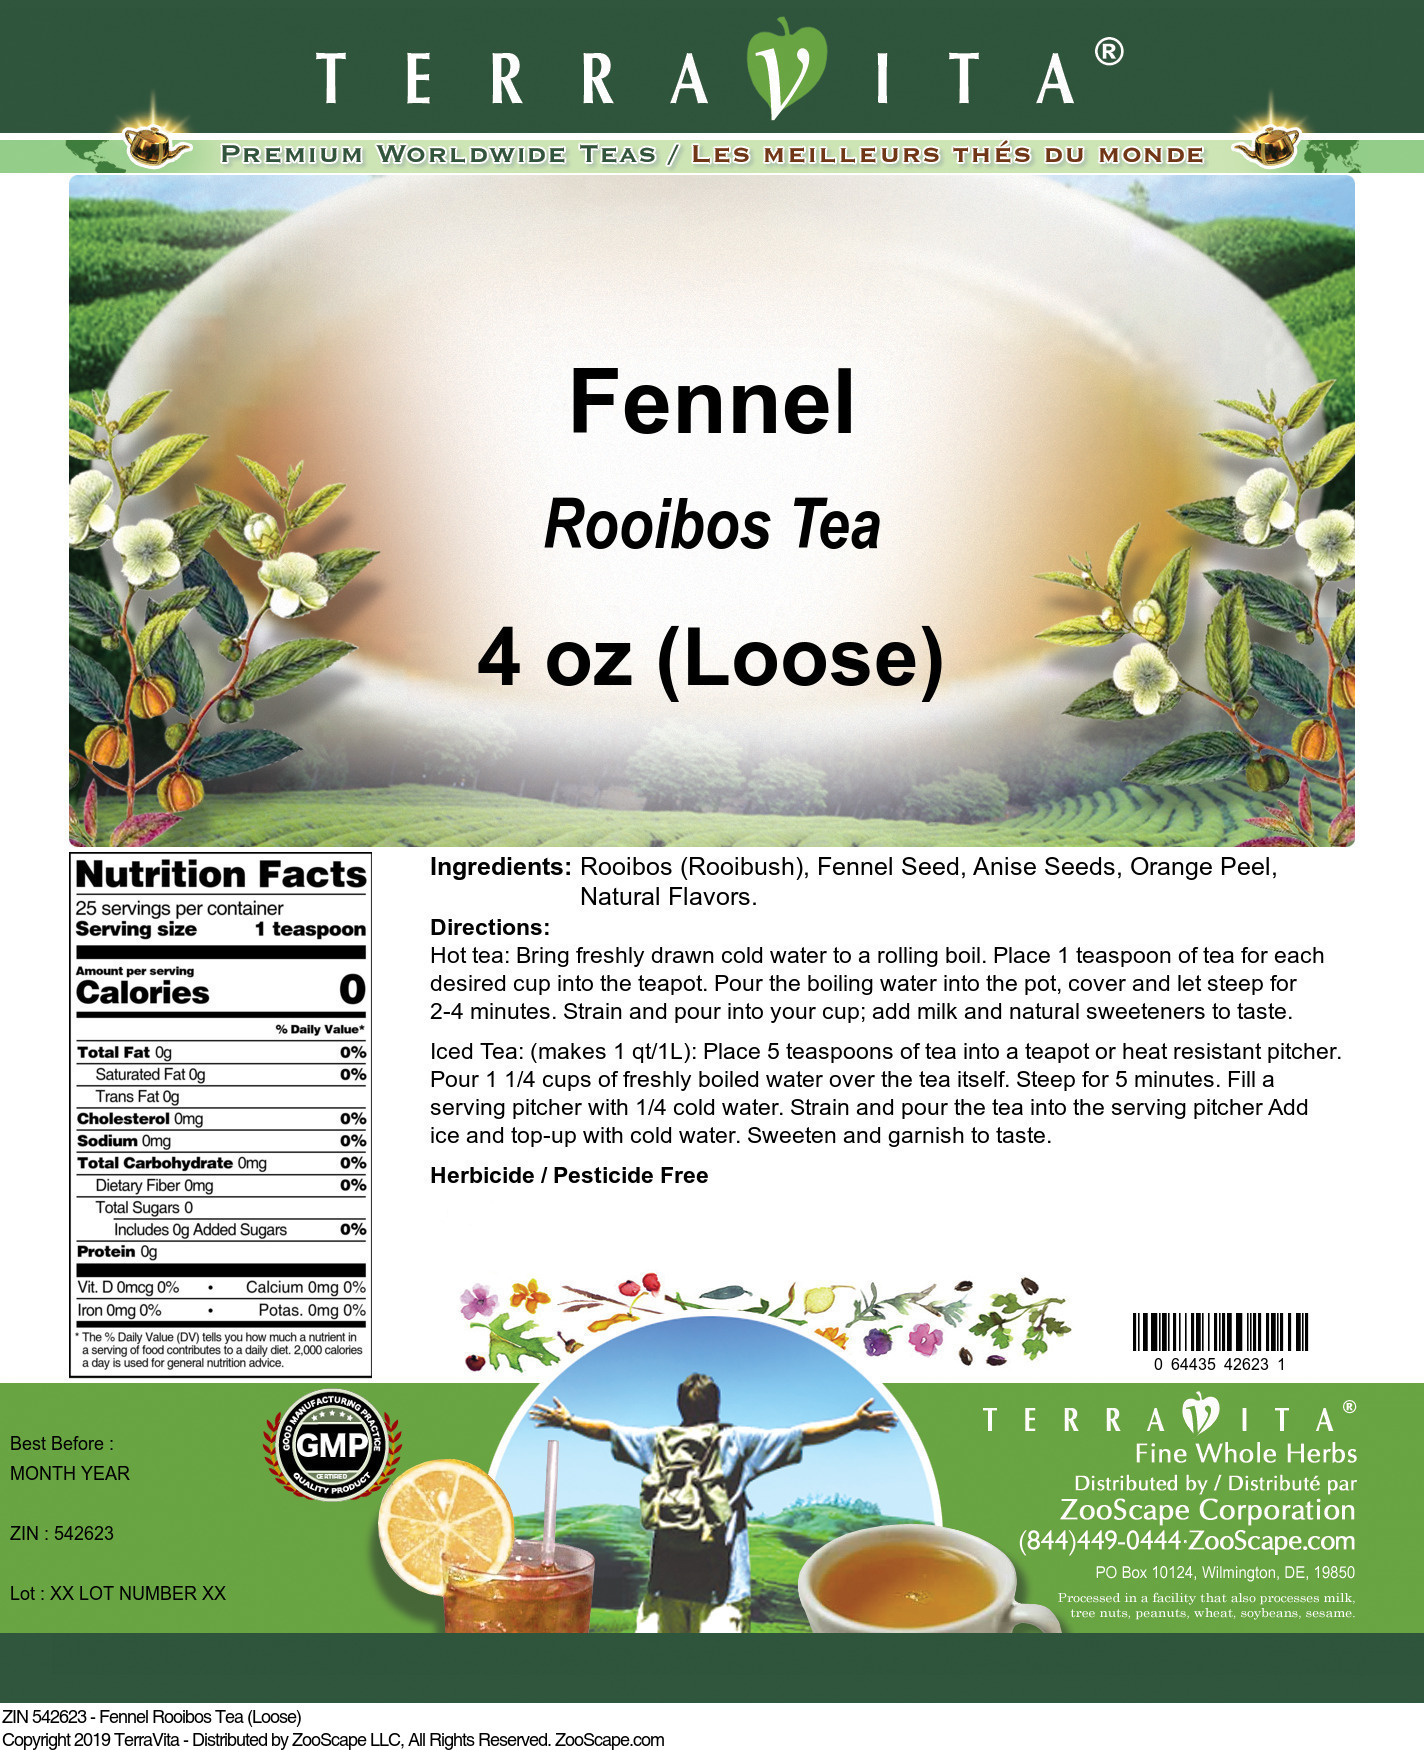 Fennel Rooibos Tea (Loose) - Label